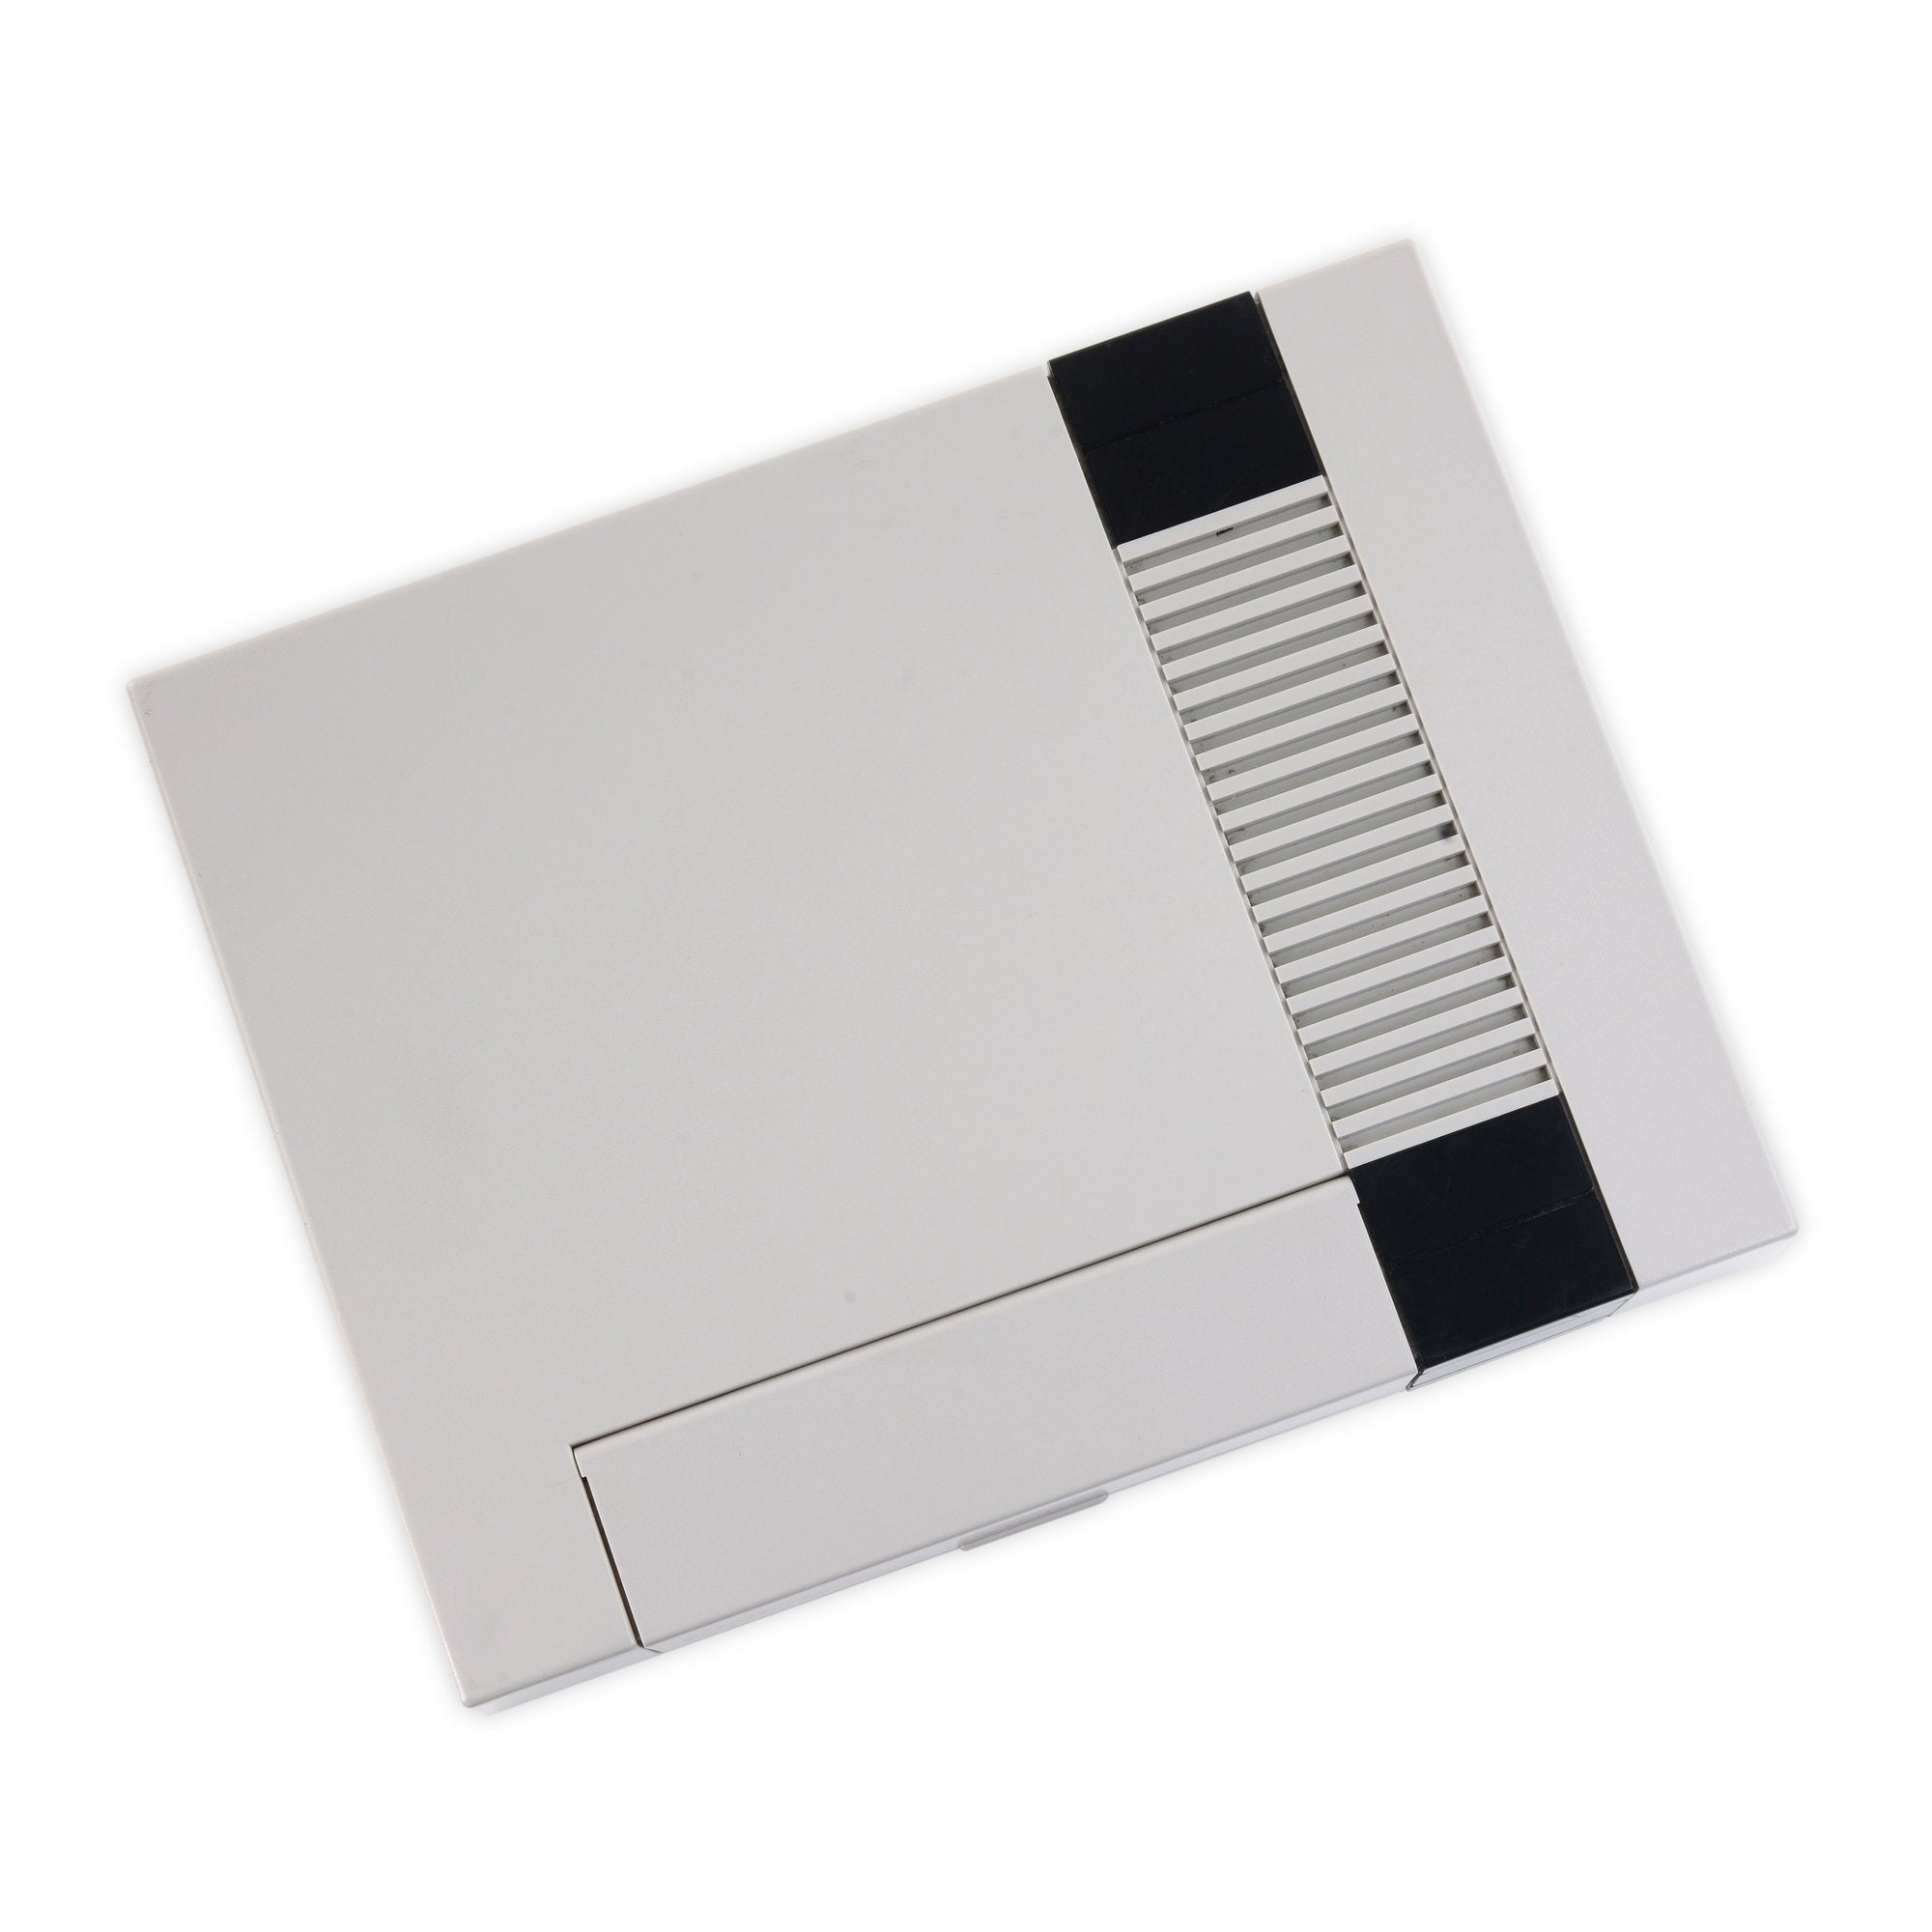 Nintendo NES-001 Top Case